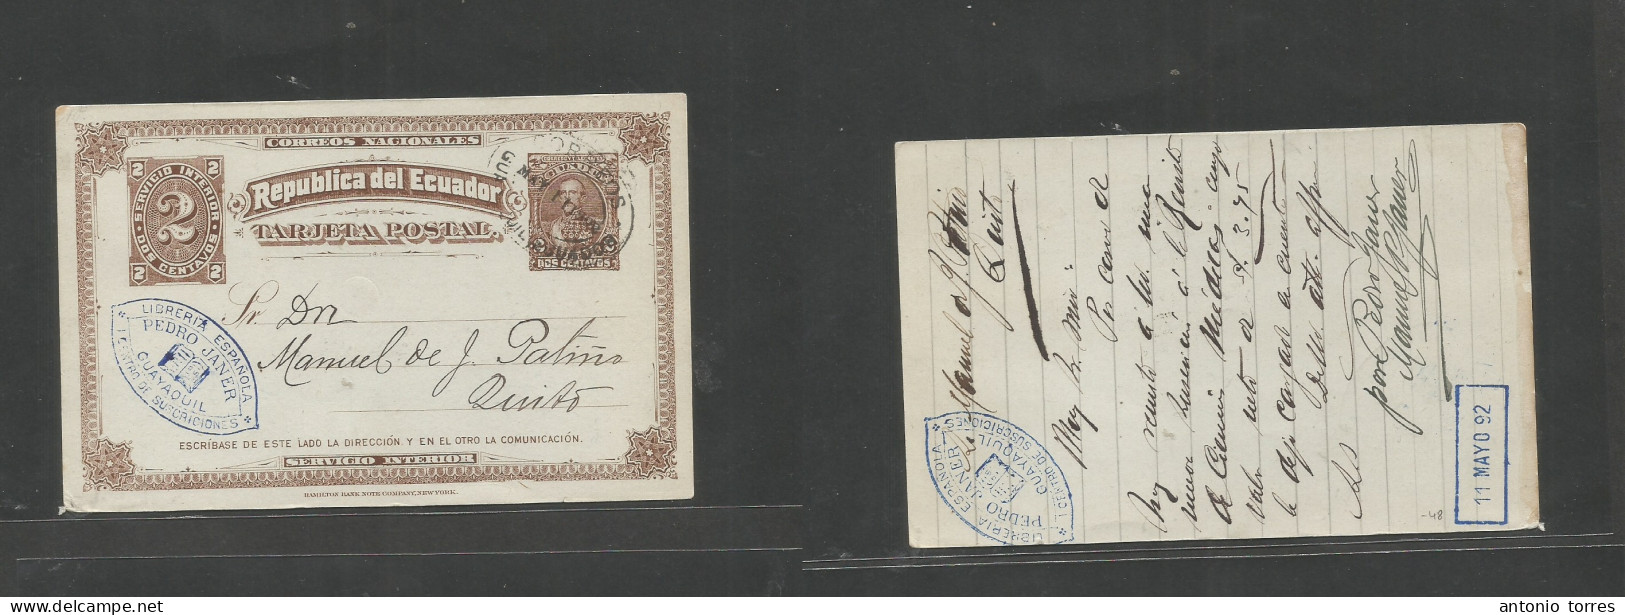 Ecuador. 1892 (11 Mayo) Guayaquil - Quito. Local 2c Brown / Greenish Illustrated Stationary Card. Fine Scarce Correct Ci - Ecuador